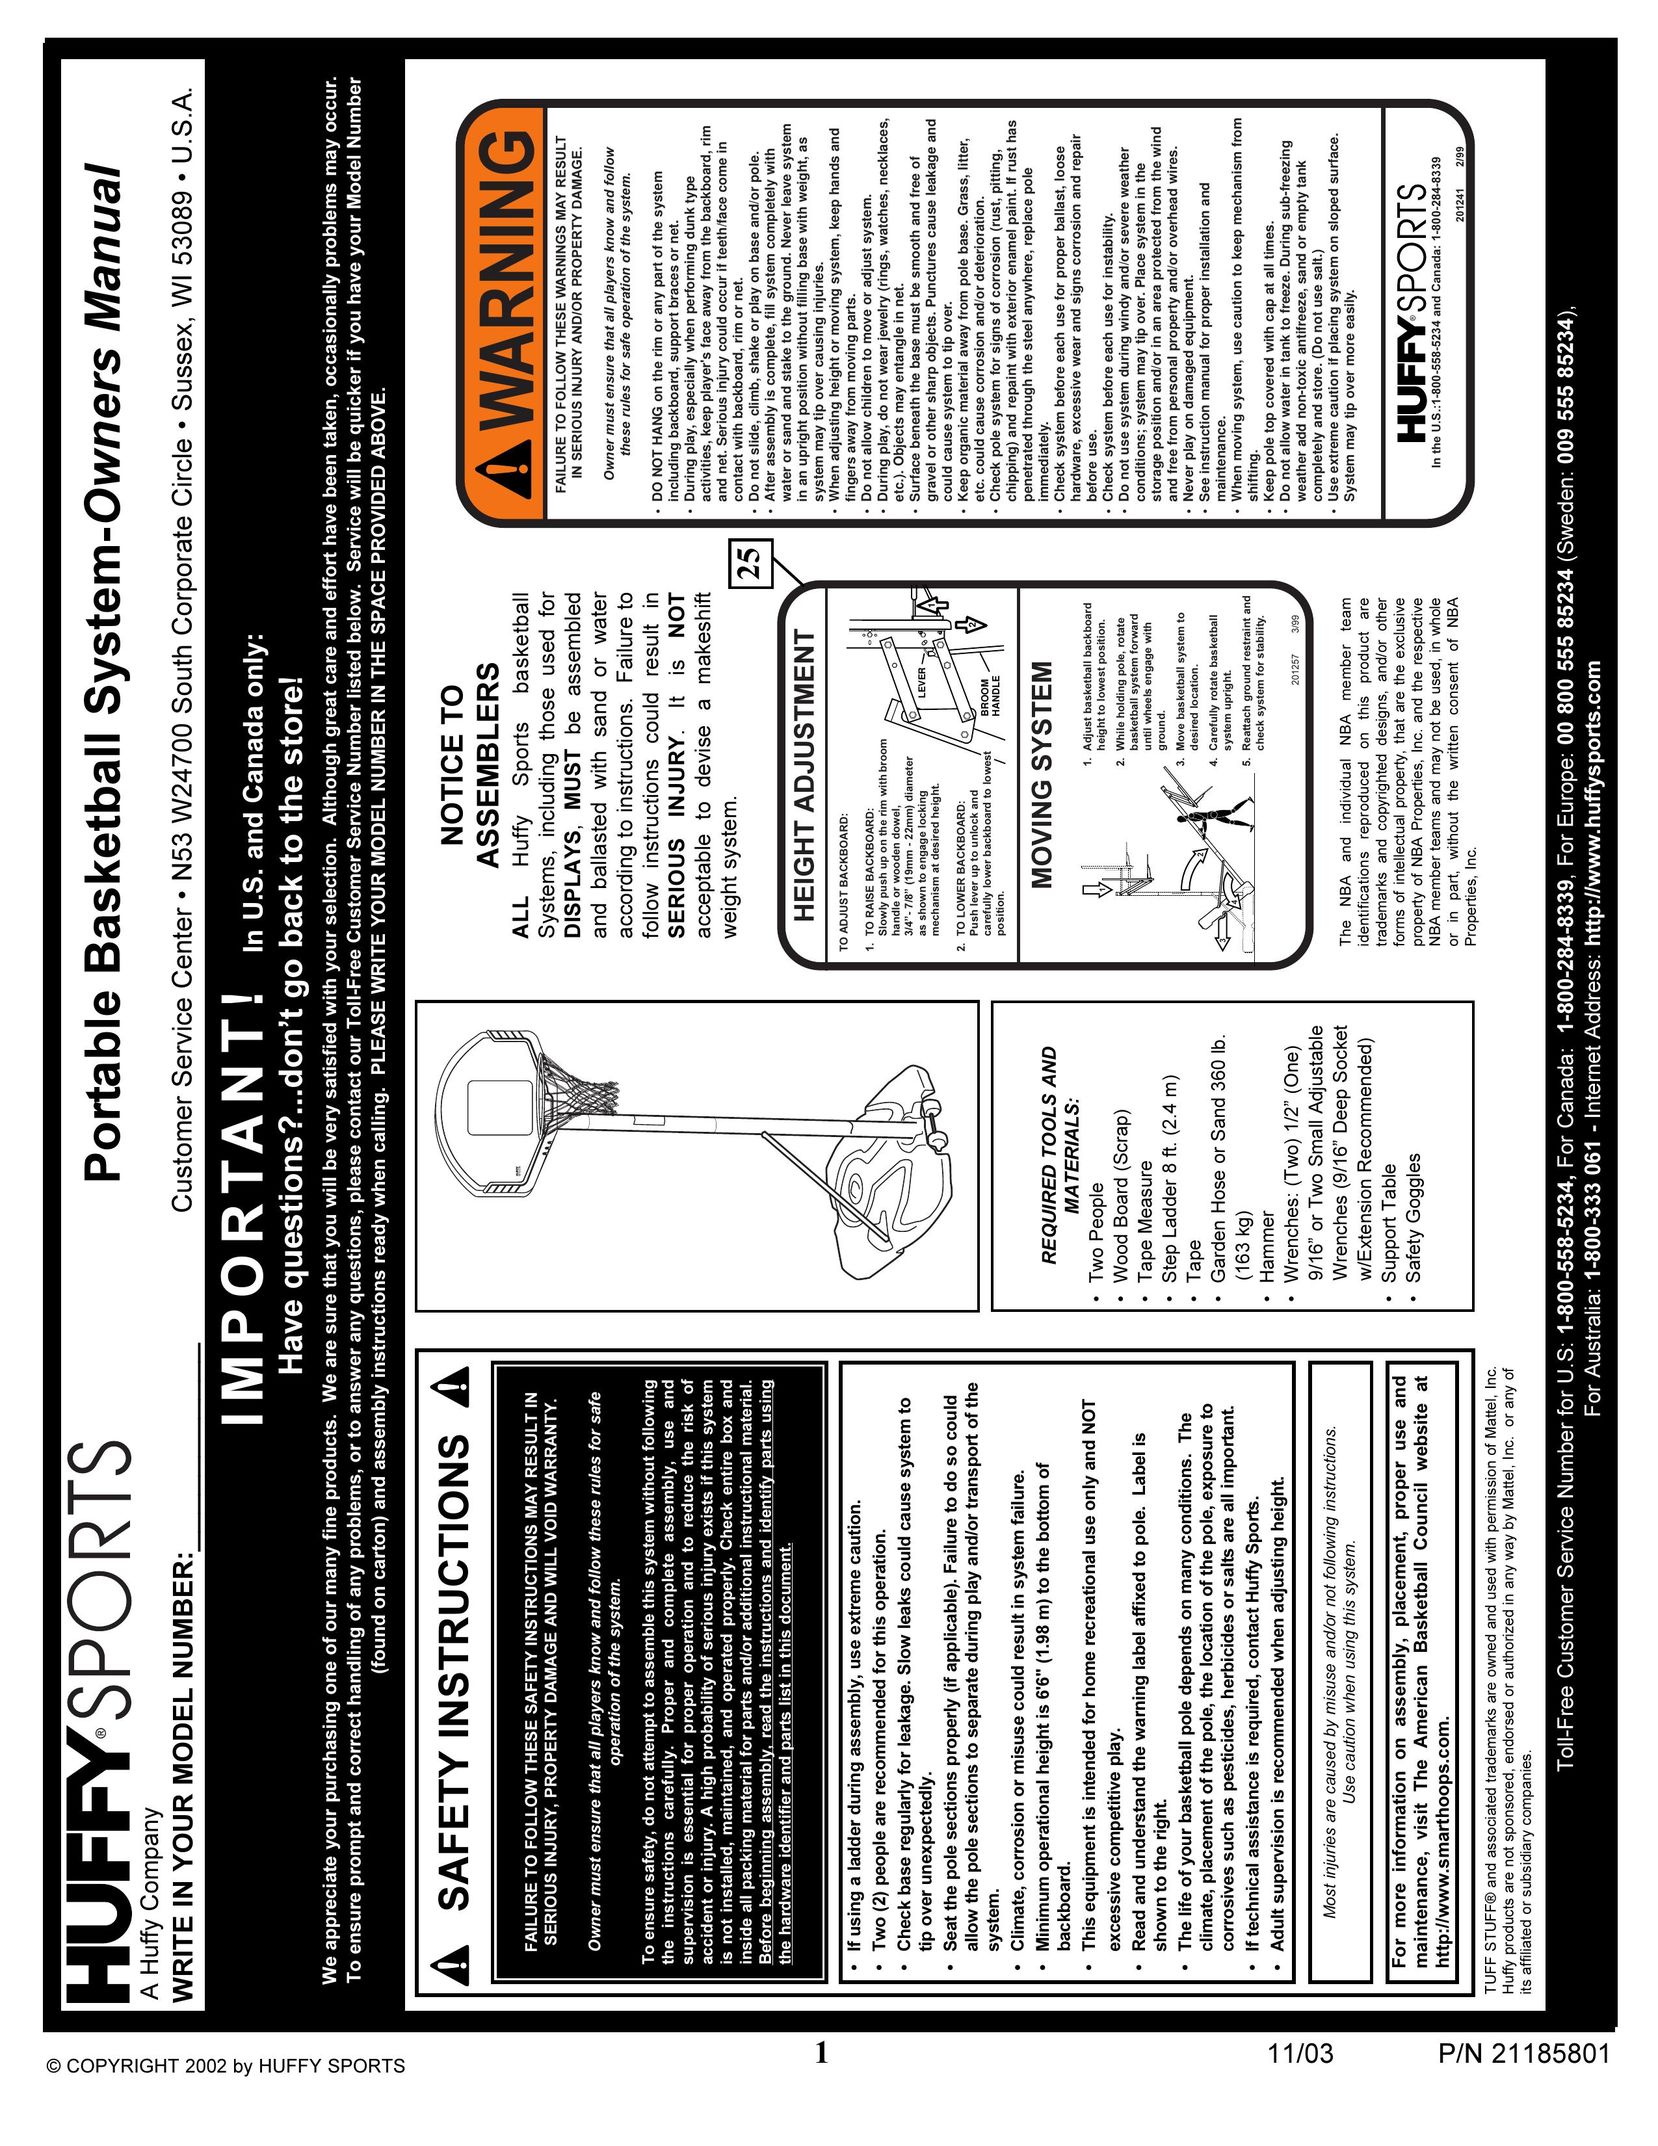 Huffy 9125 7002000 Fitness Equipment User Manual